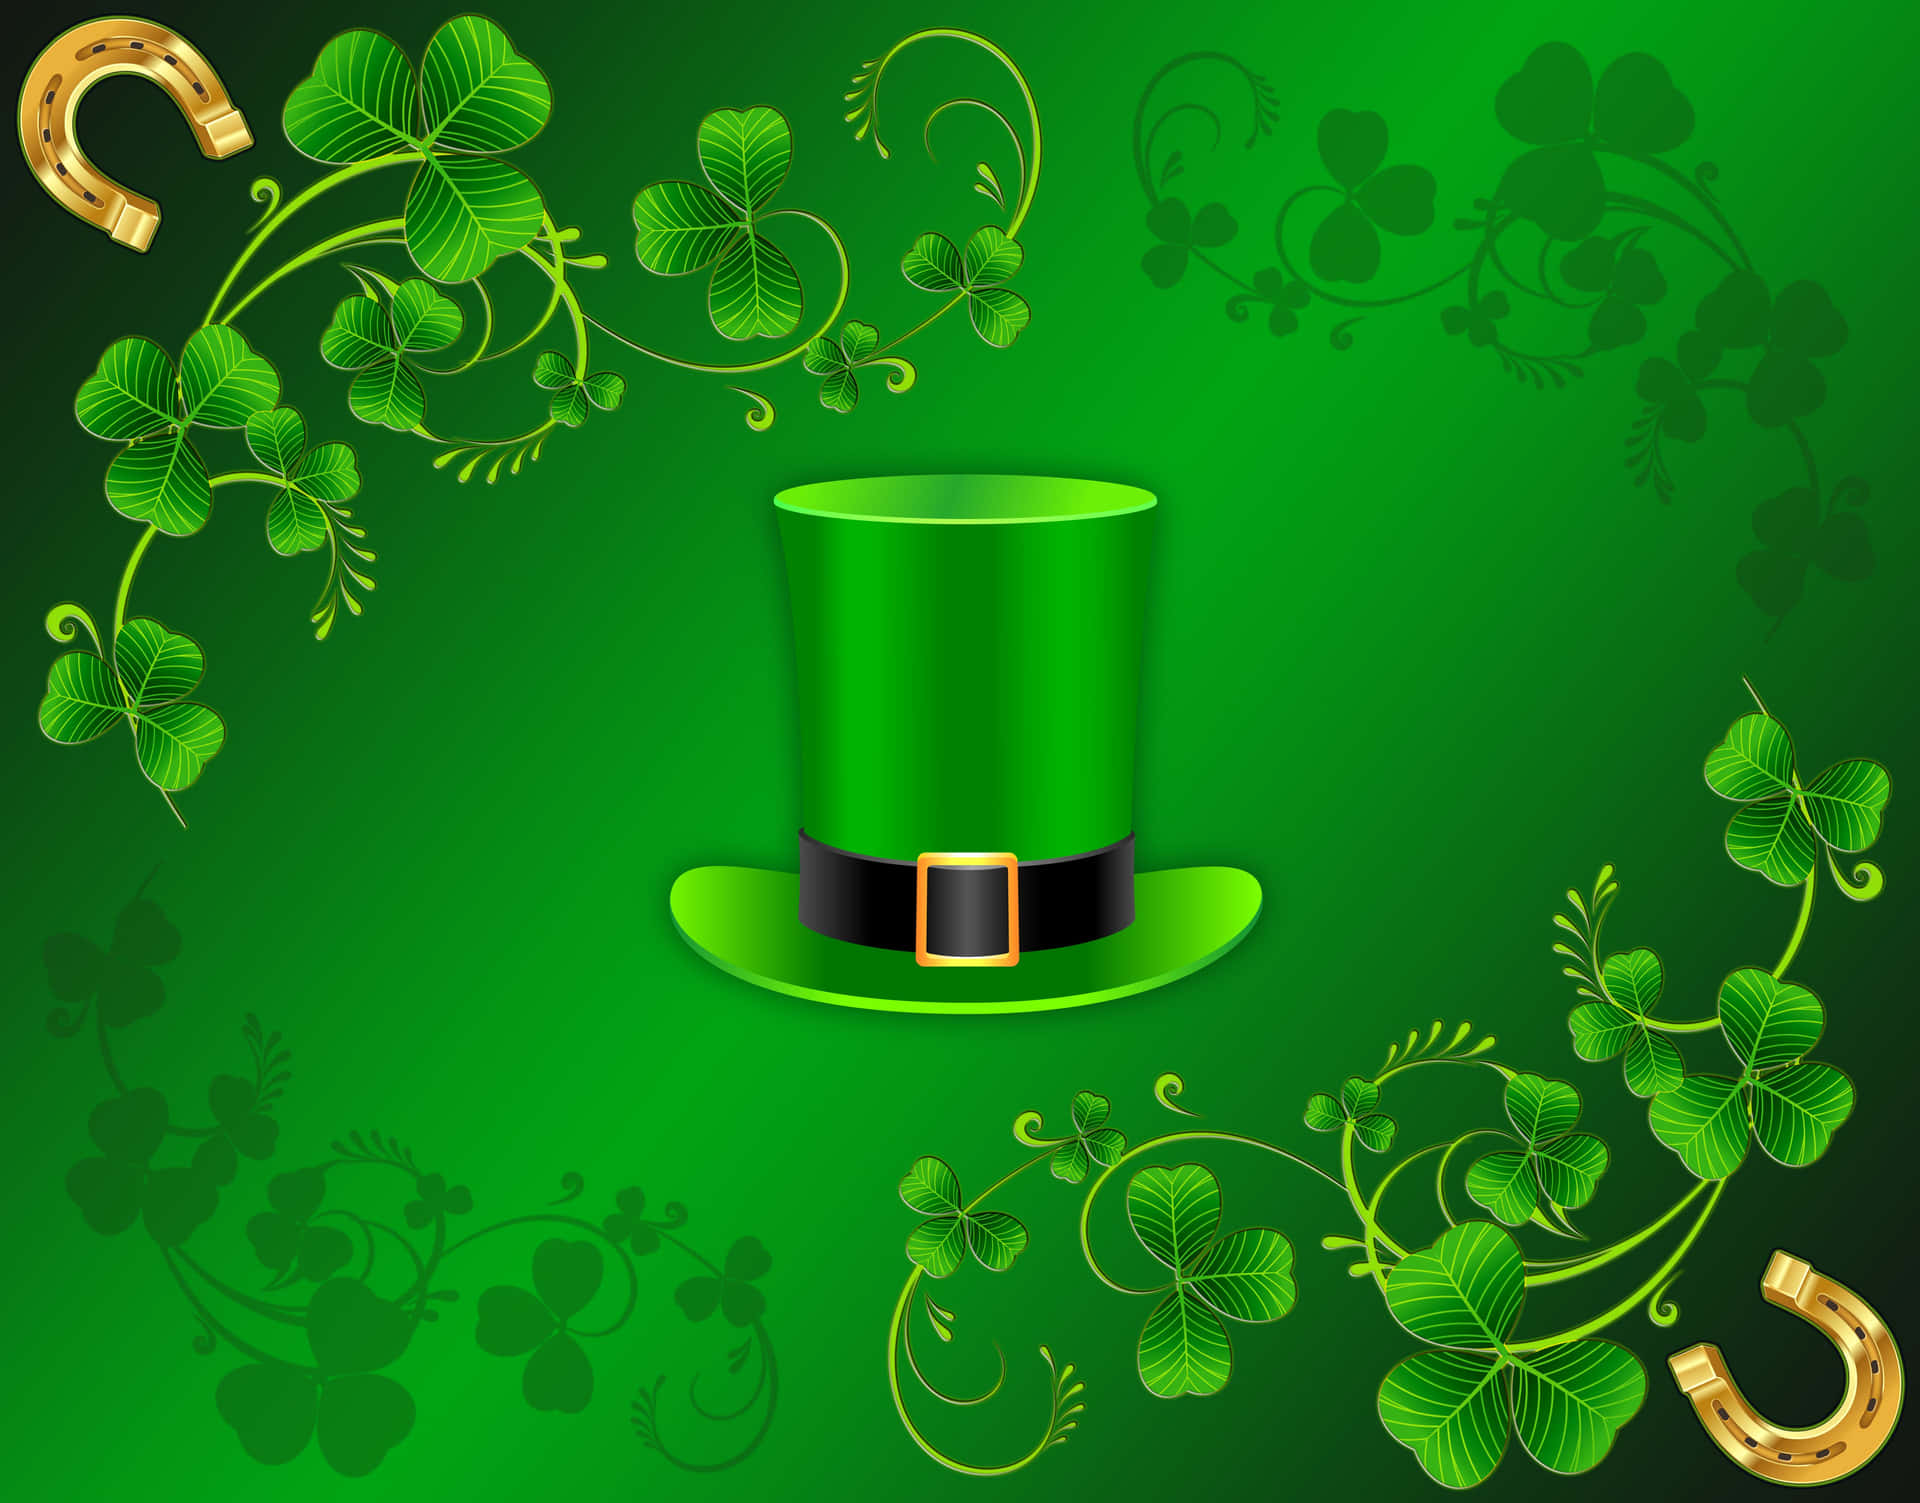 Saint Patrick's Day celebration with vibrant colors and Irish symbols